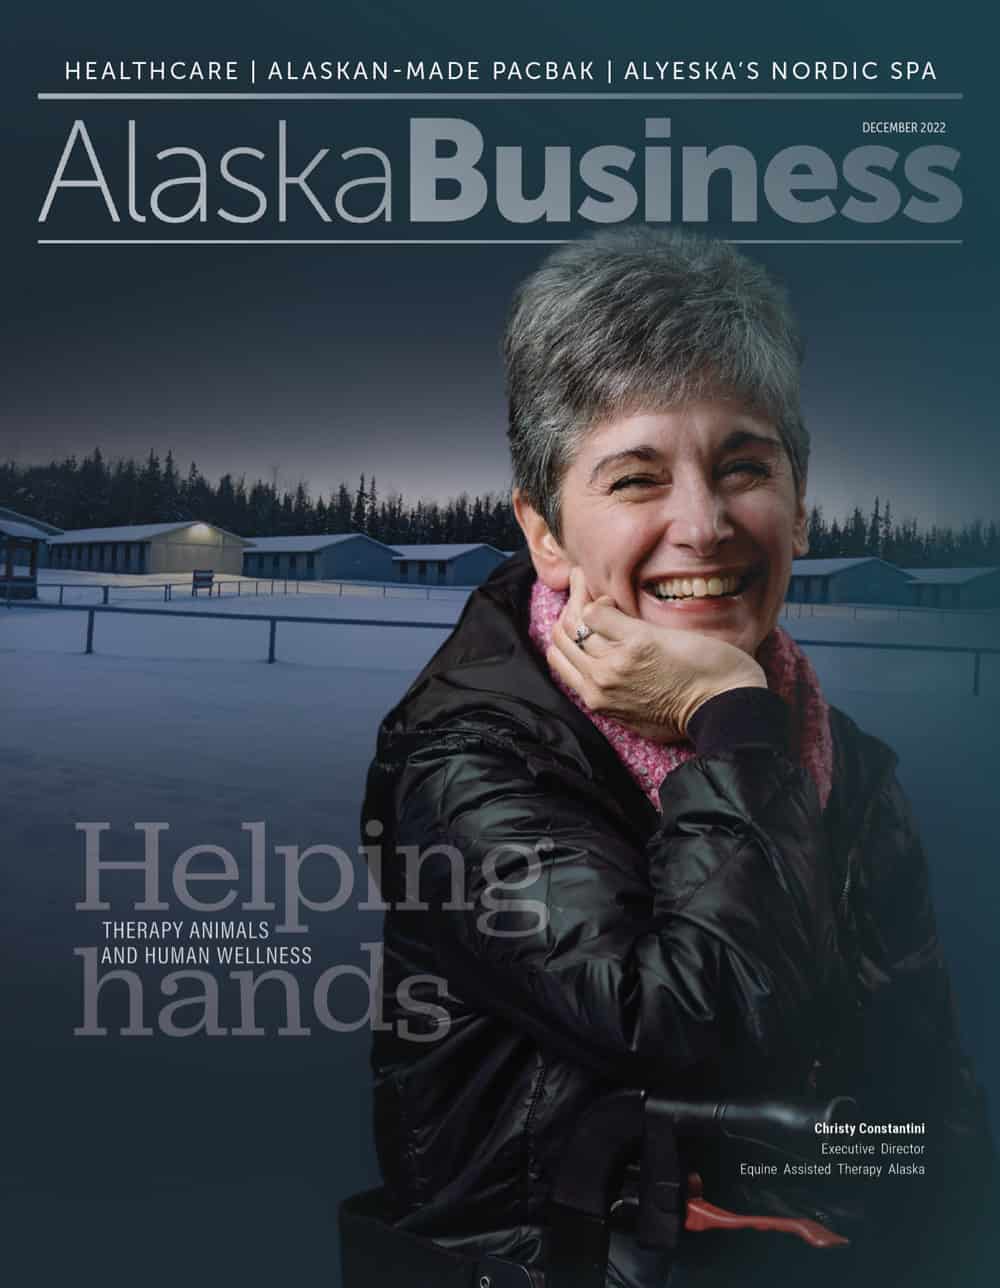 Alaska Business December 2022 cover